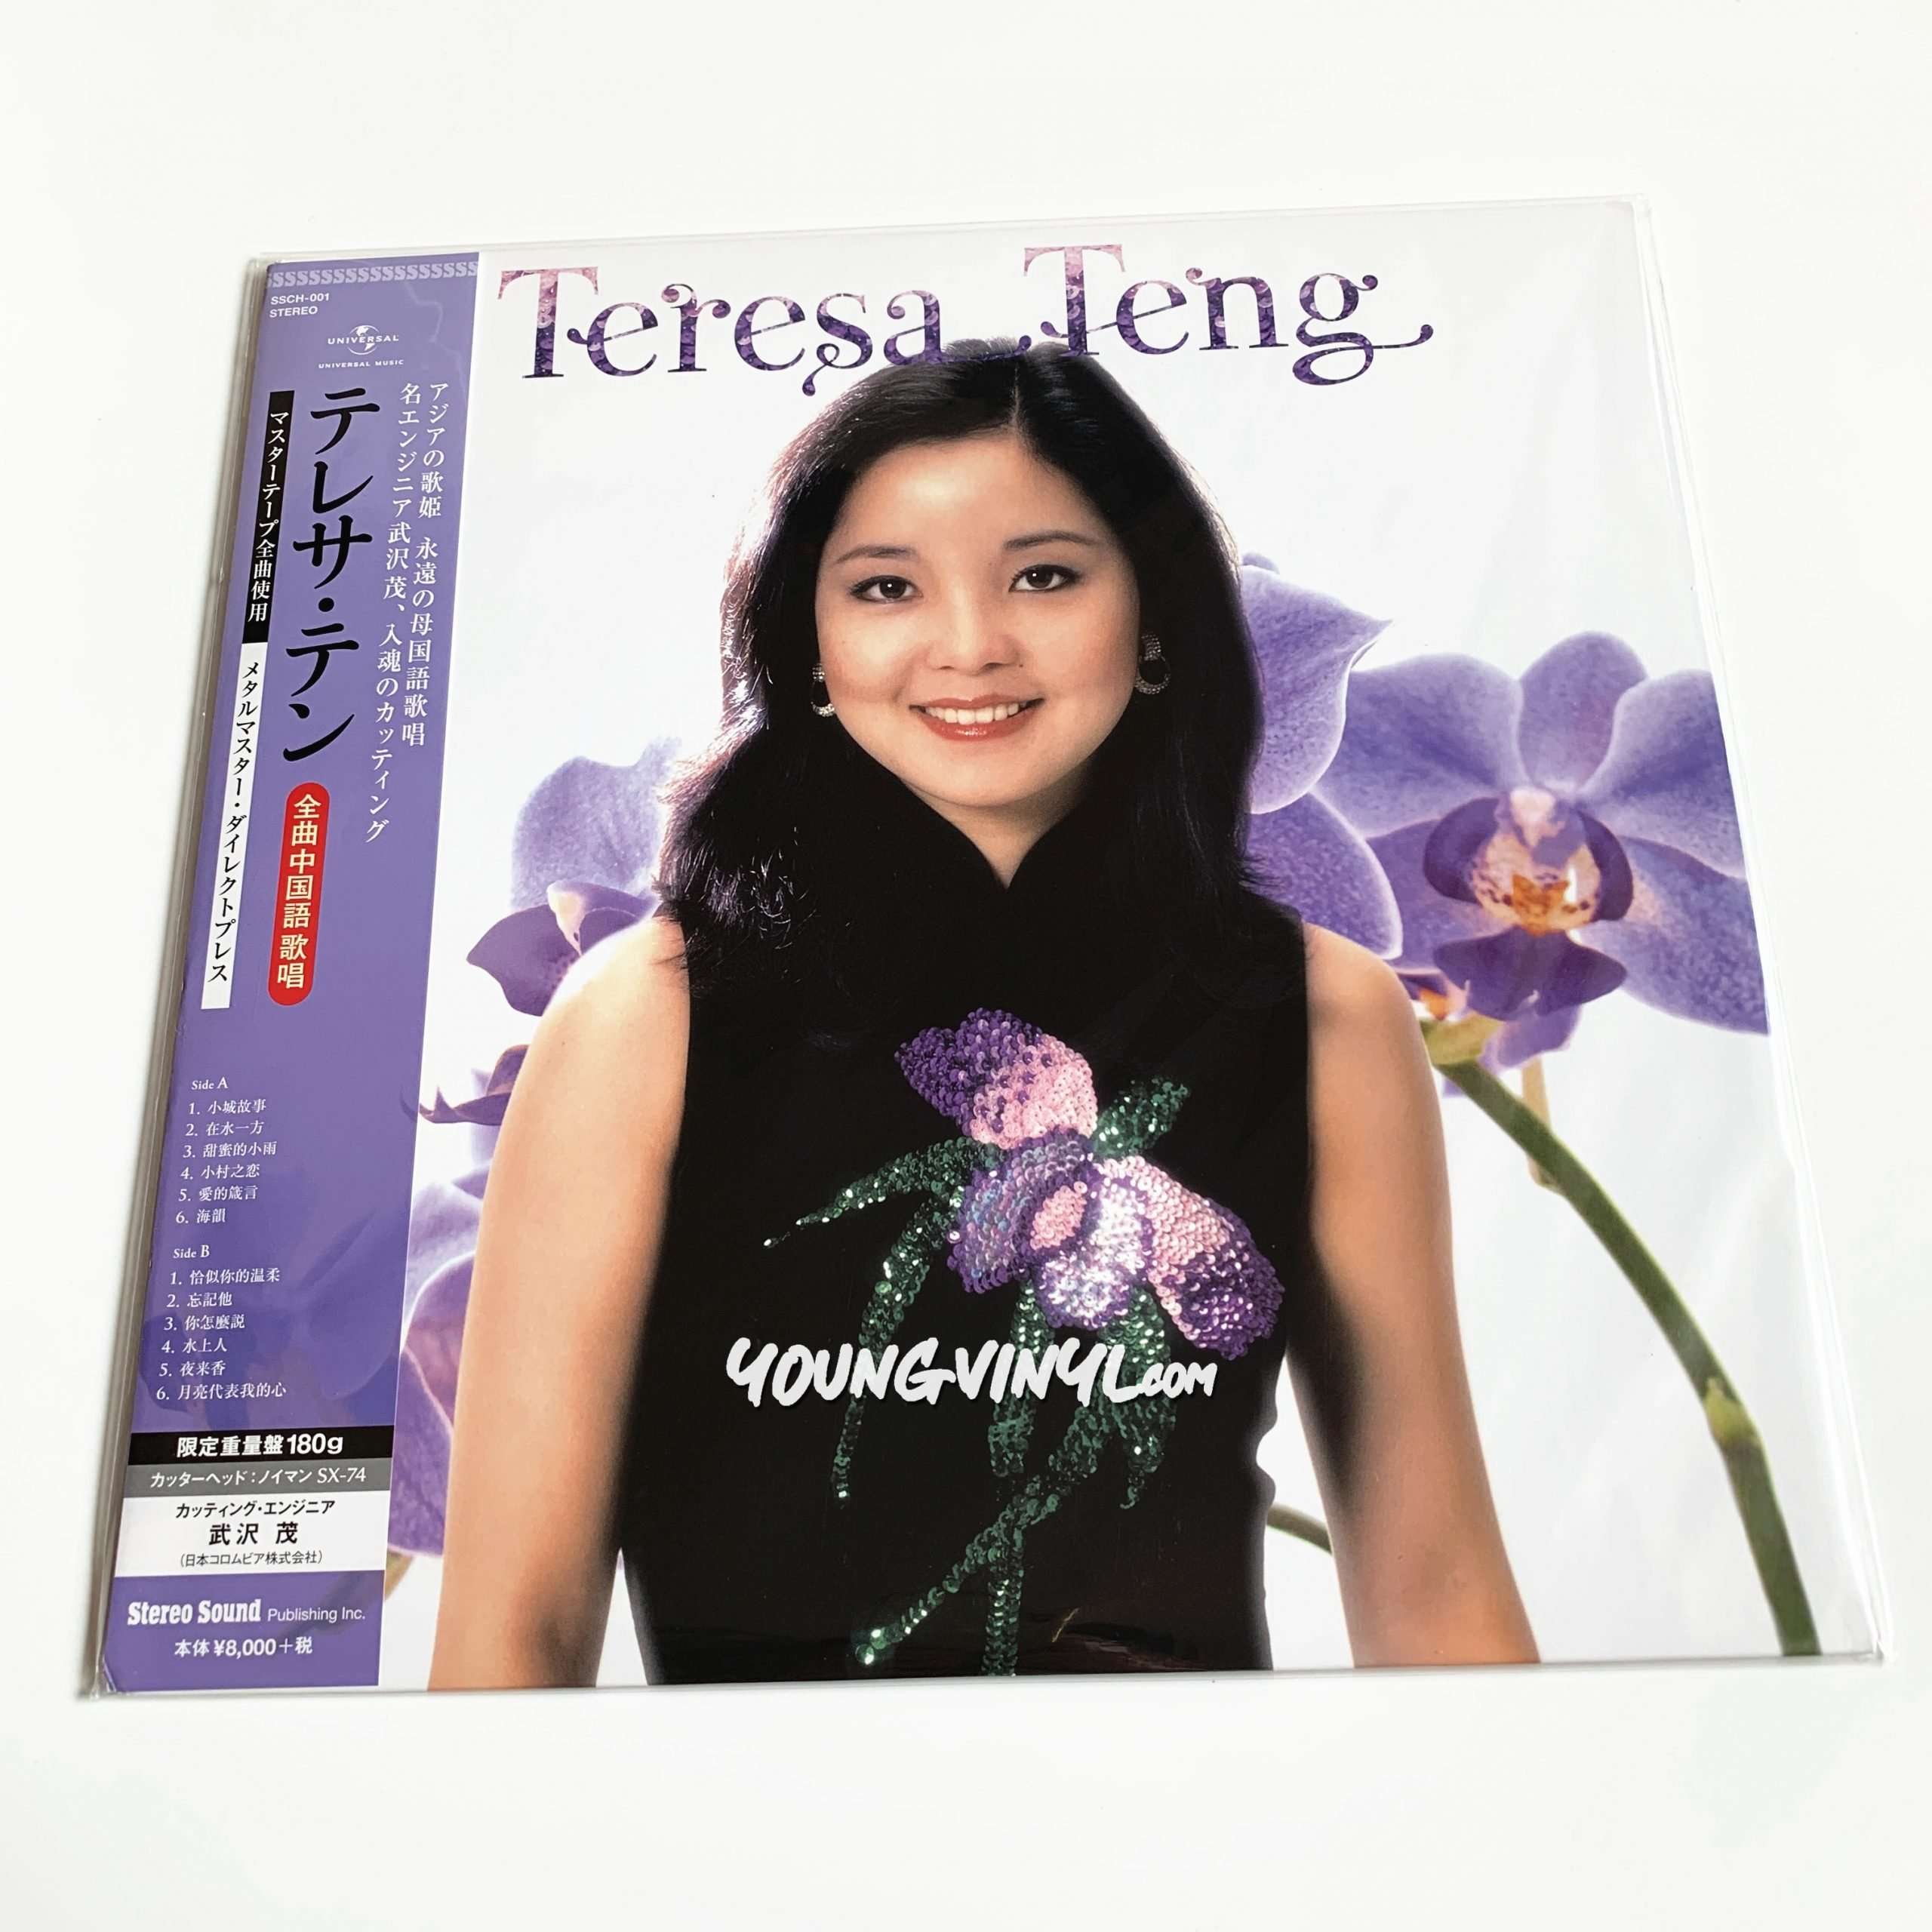 Teresa Teng 全曲中国語歌唱Vinyl 鄧麗君テレサ・テンStereo Sound 黑 